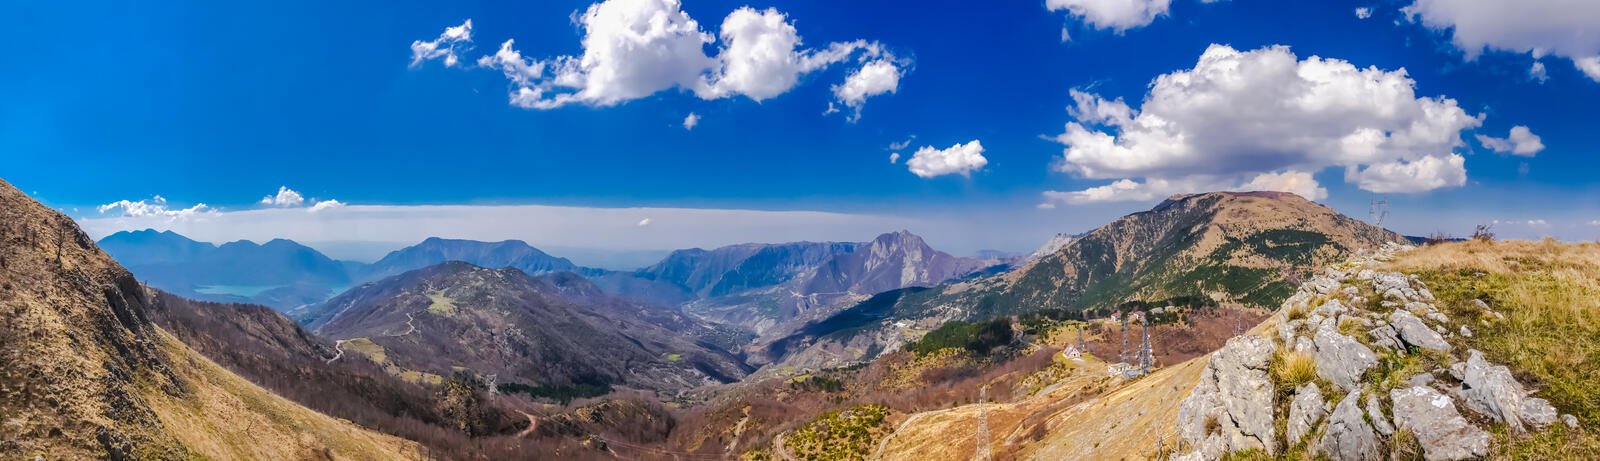 Обои Албания гора Панорама на рабочий стол